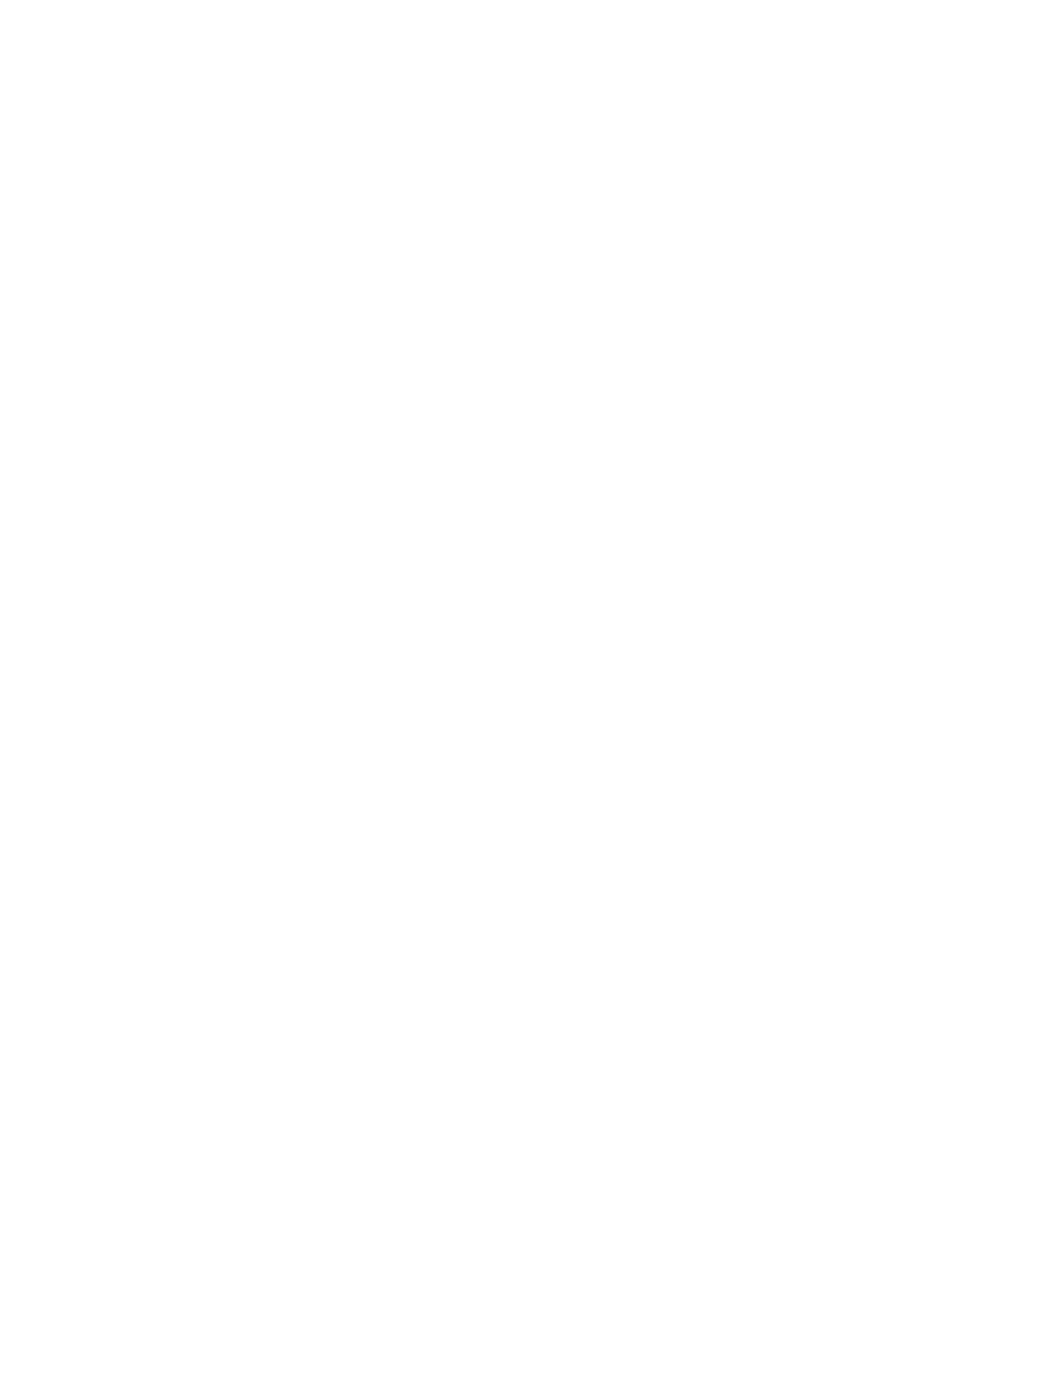 Mulberry Tree